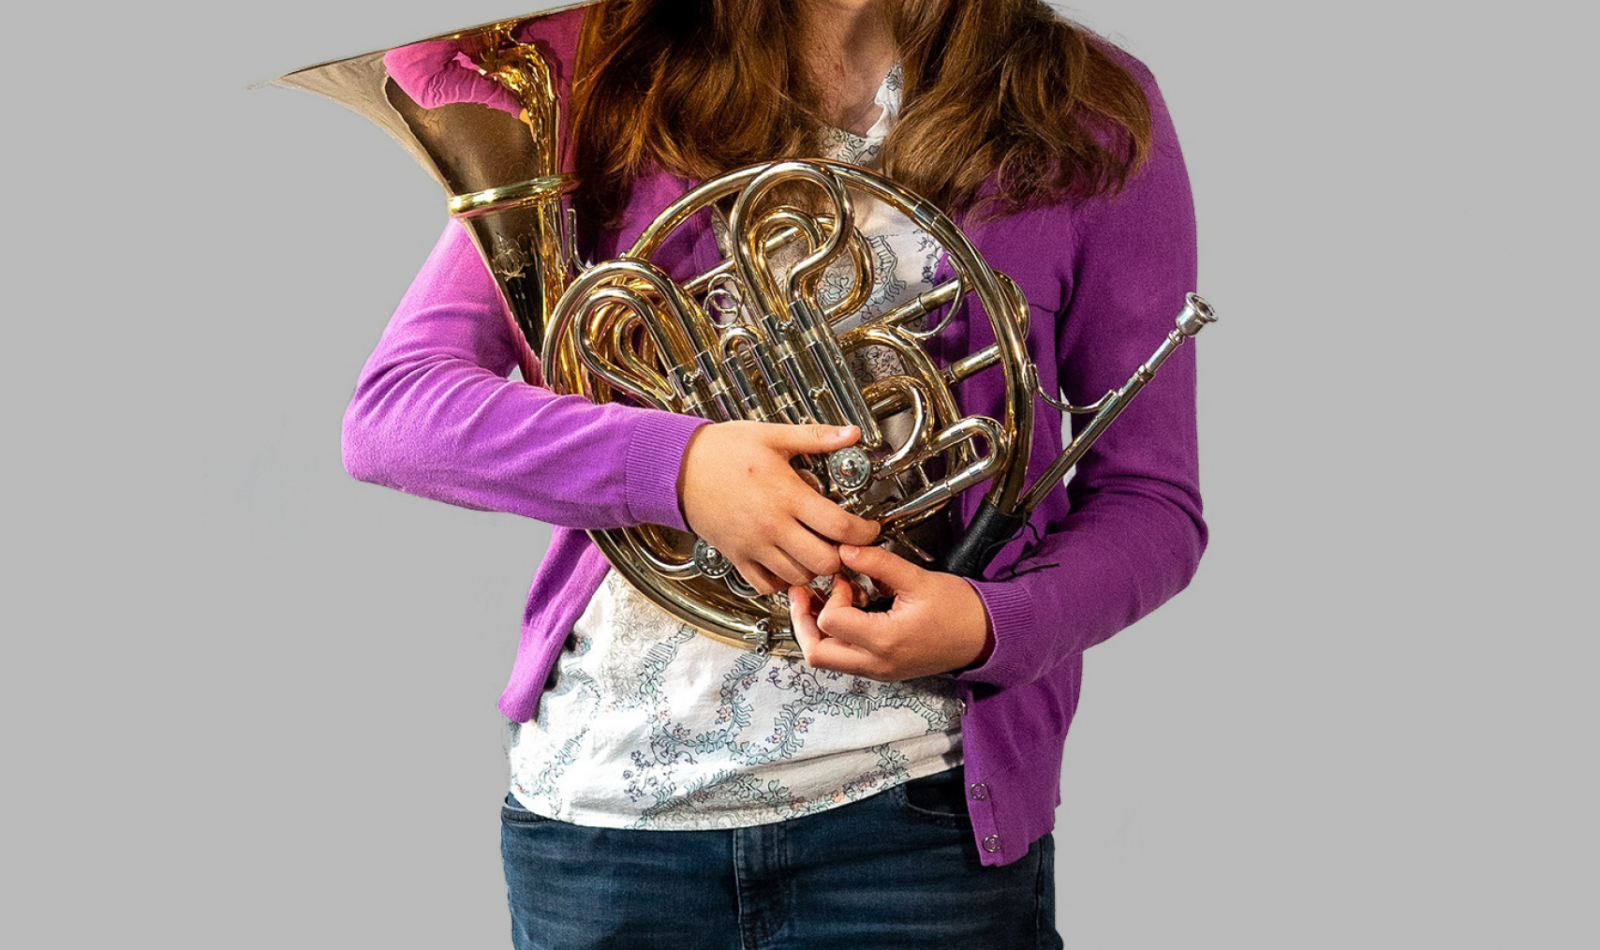 NOYO French horn player, Georgina